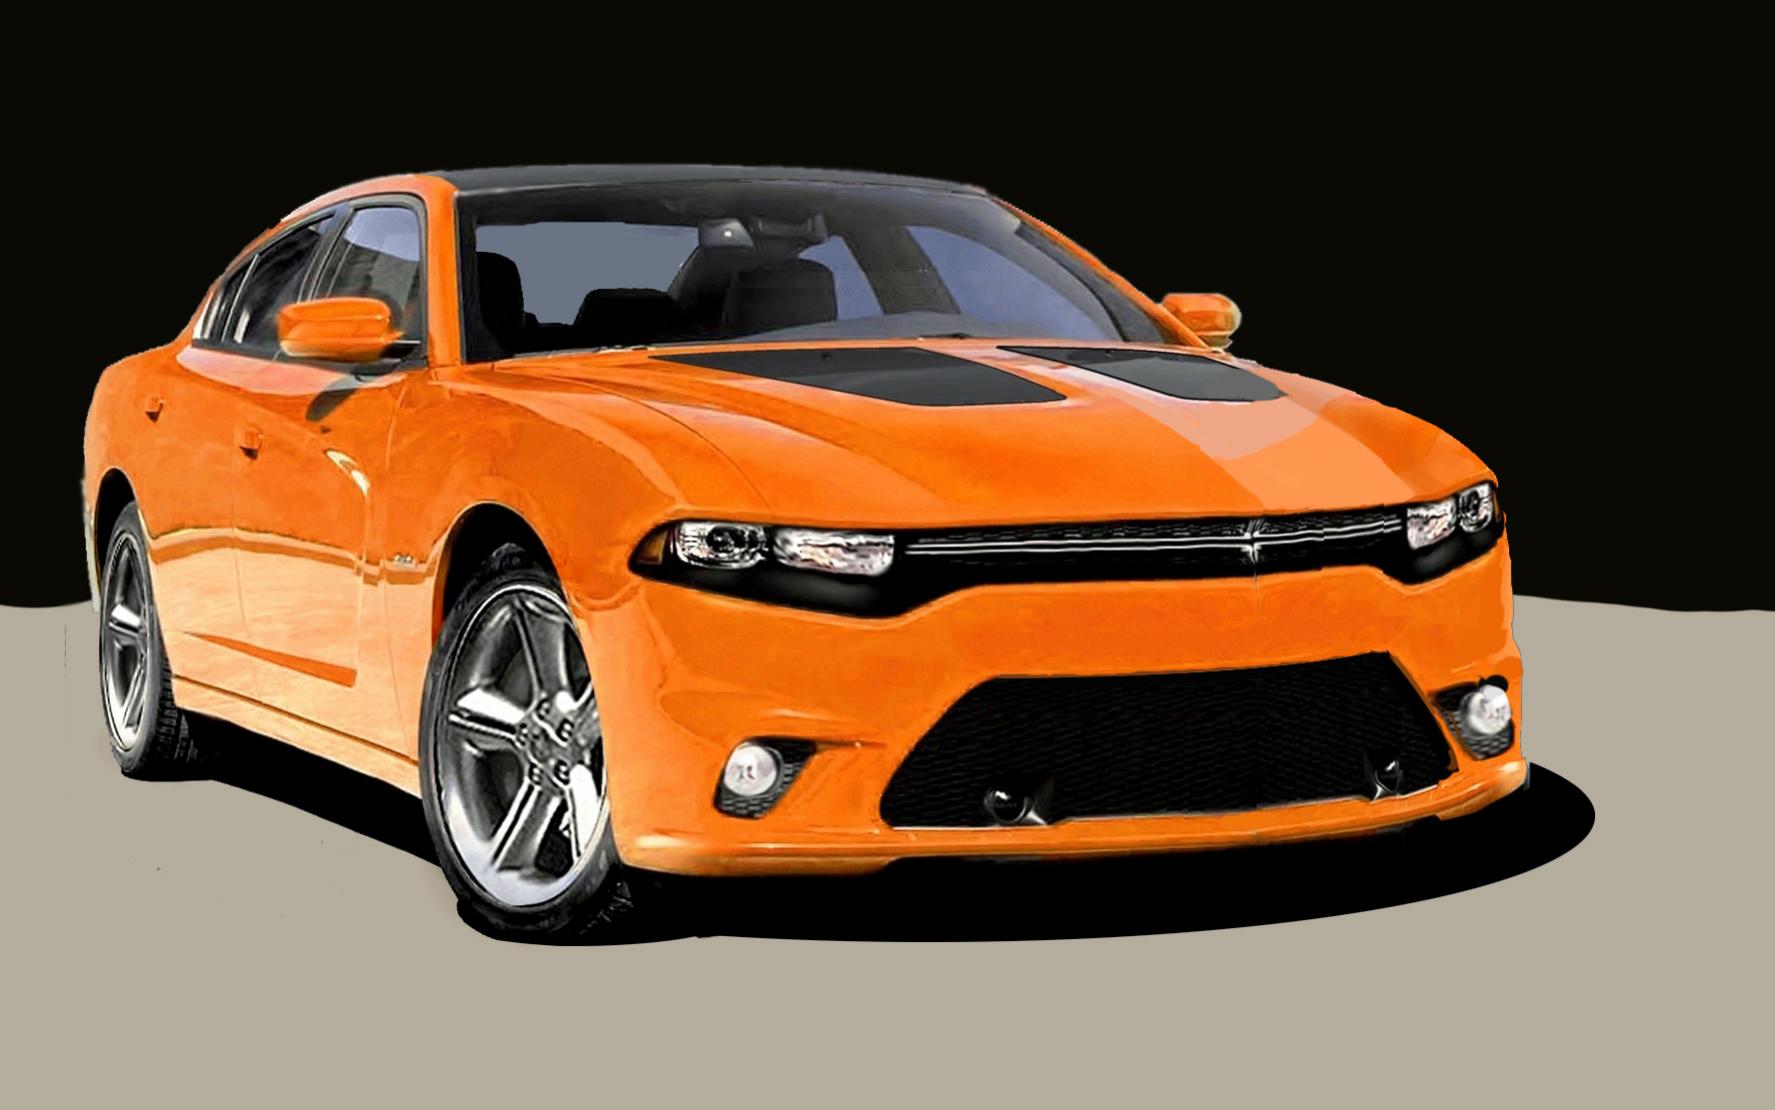 Dodge Charger Hellcat 2015 HD Image Wallpaper Download CarsWallpaper